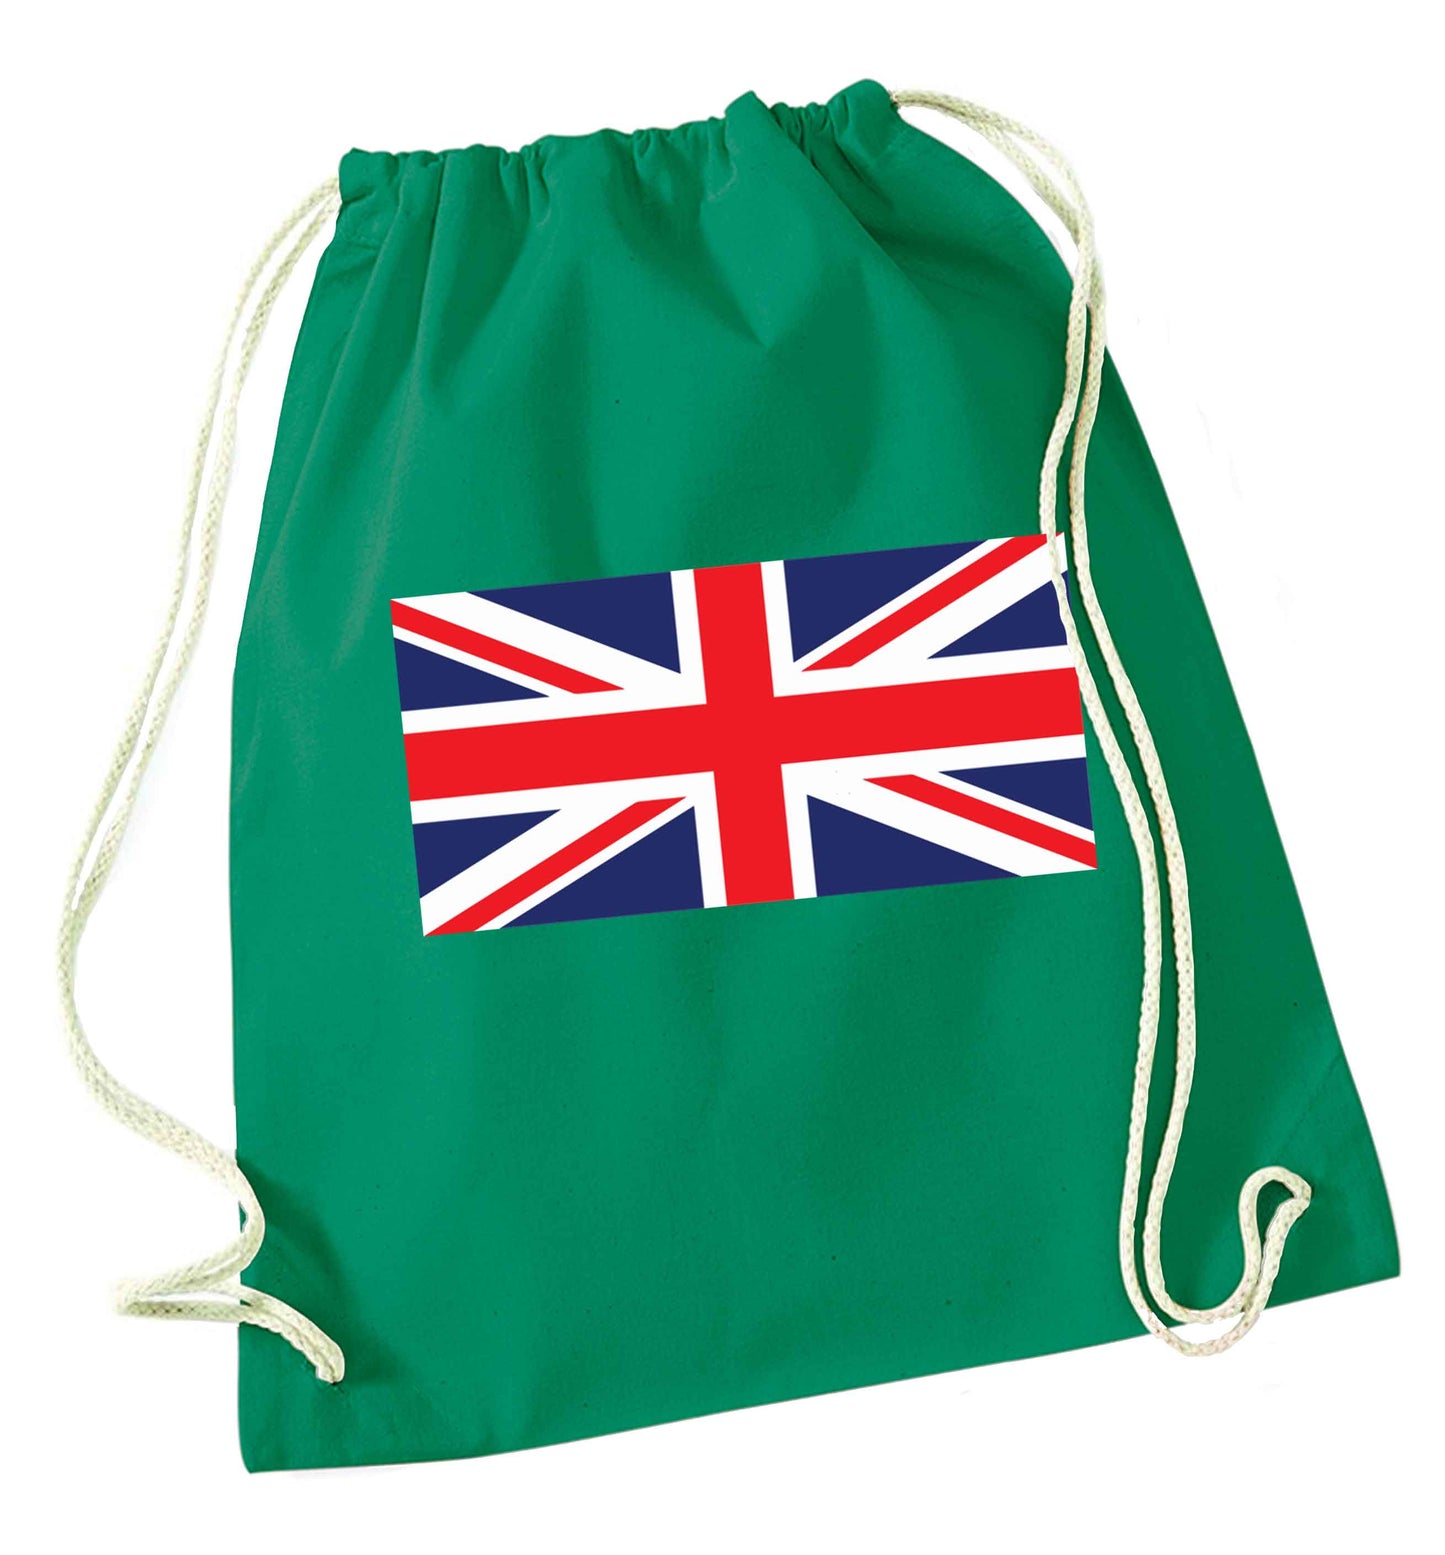 Union Jack green drawstring bag